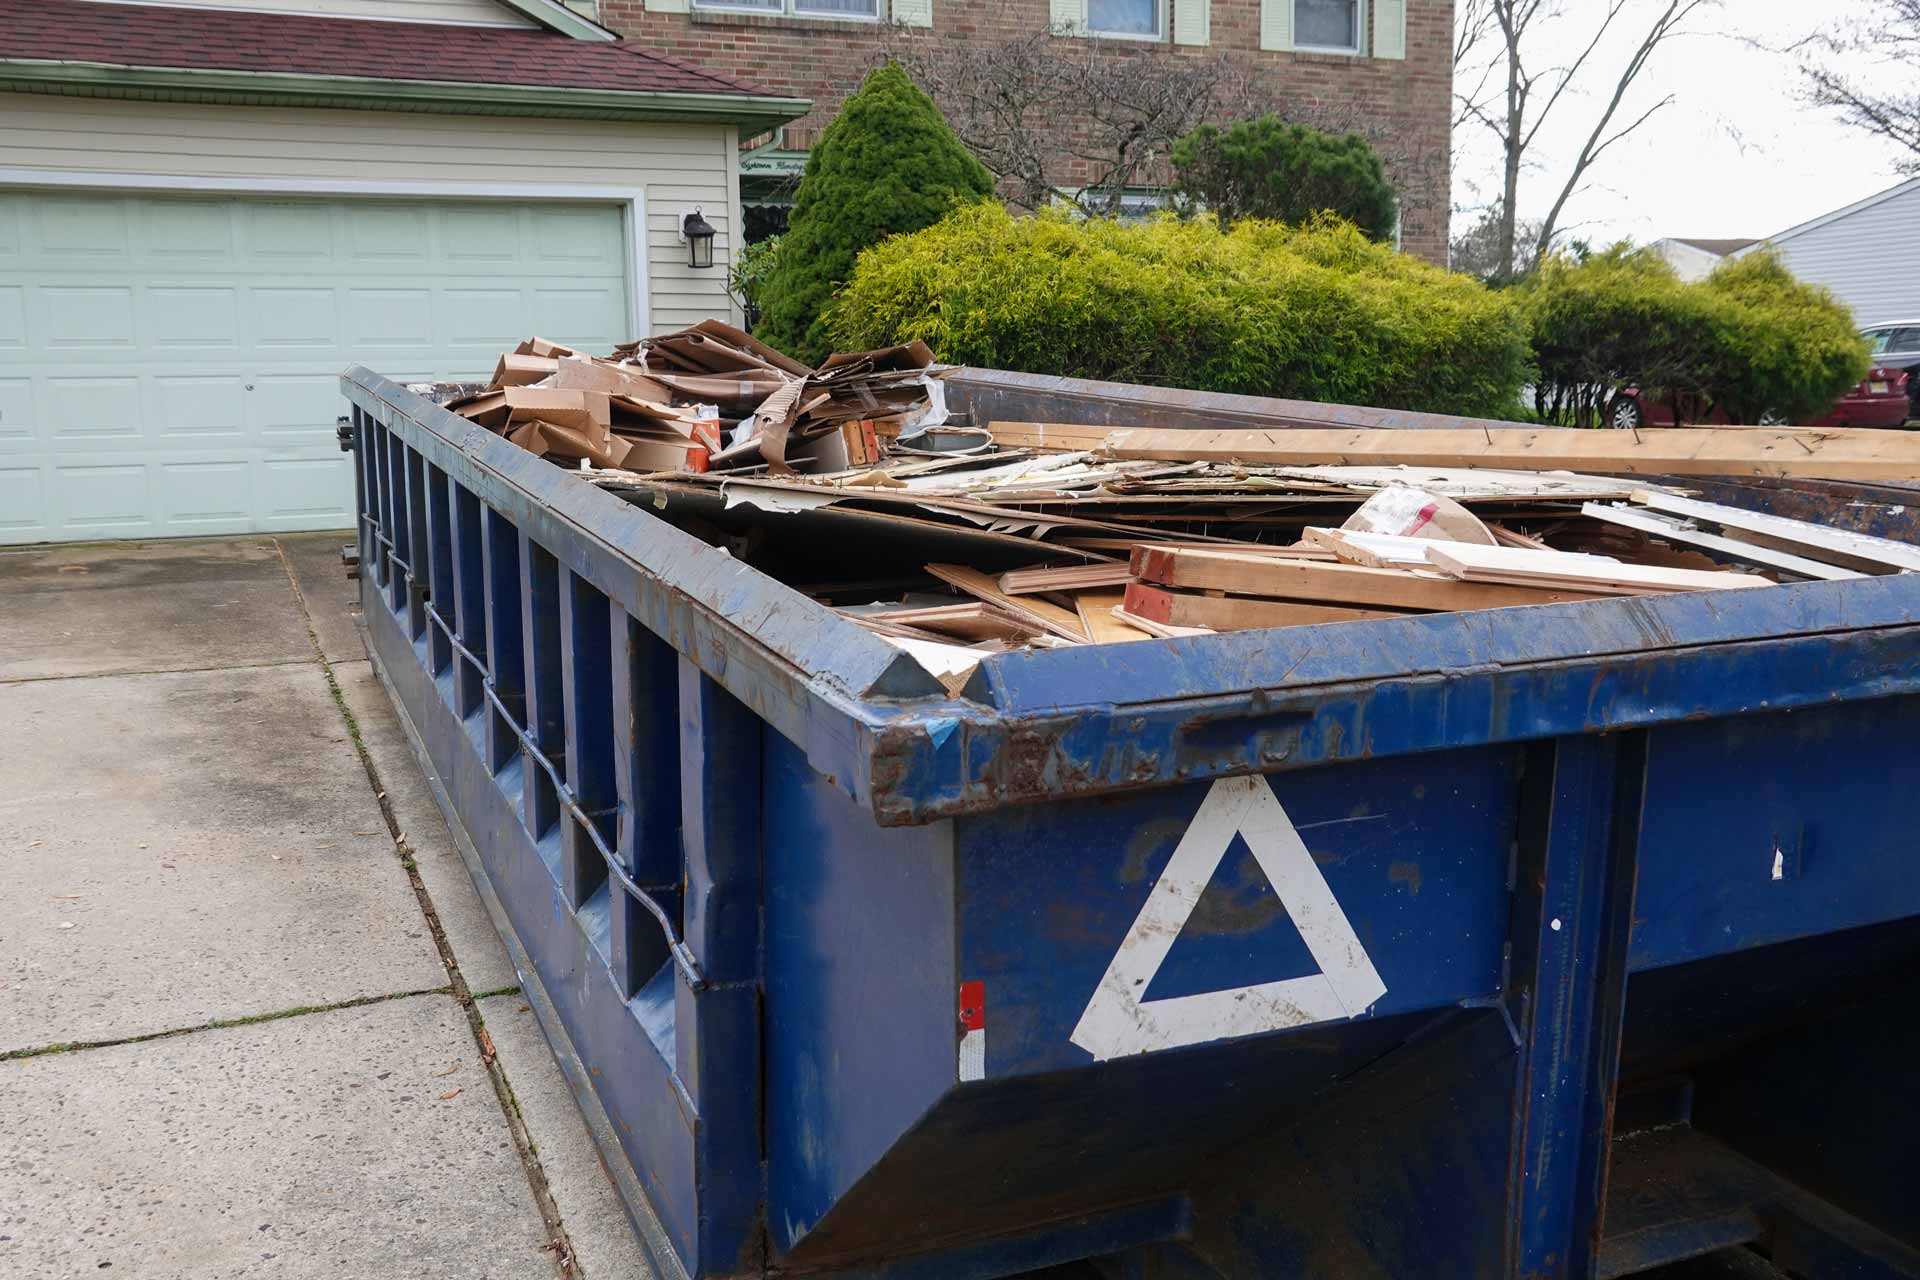 Blue rental dumpster full of construction debris